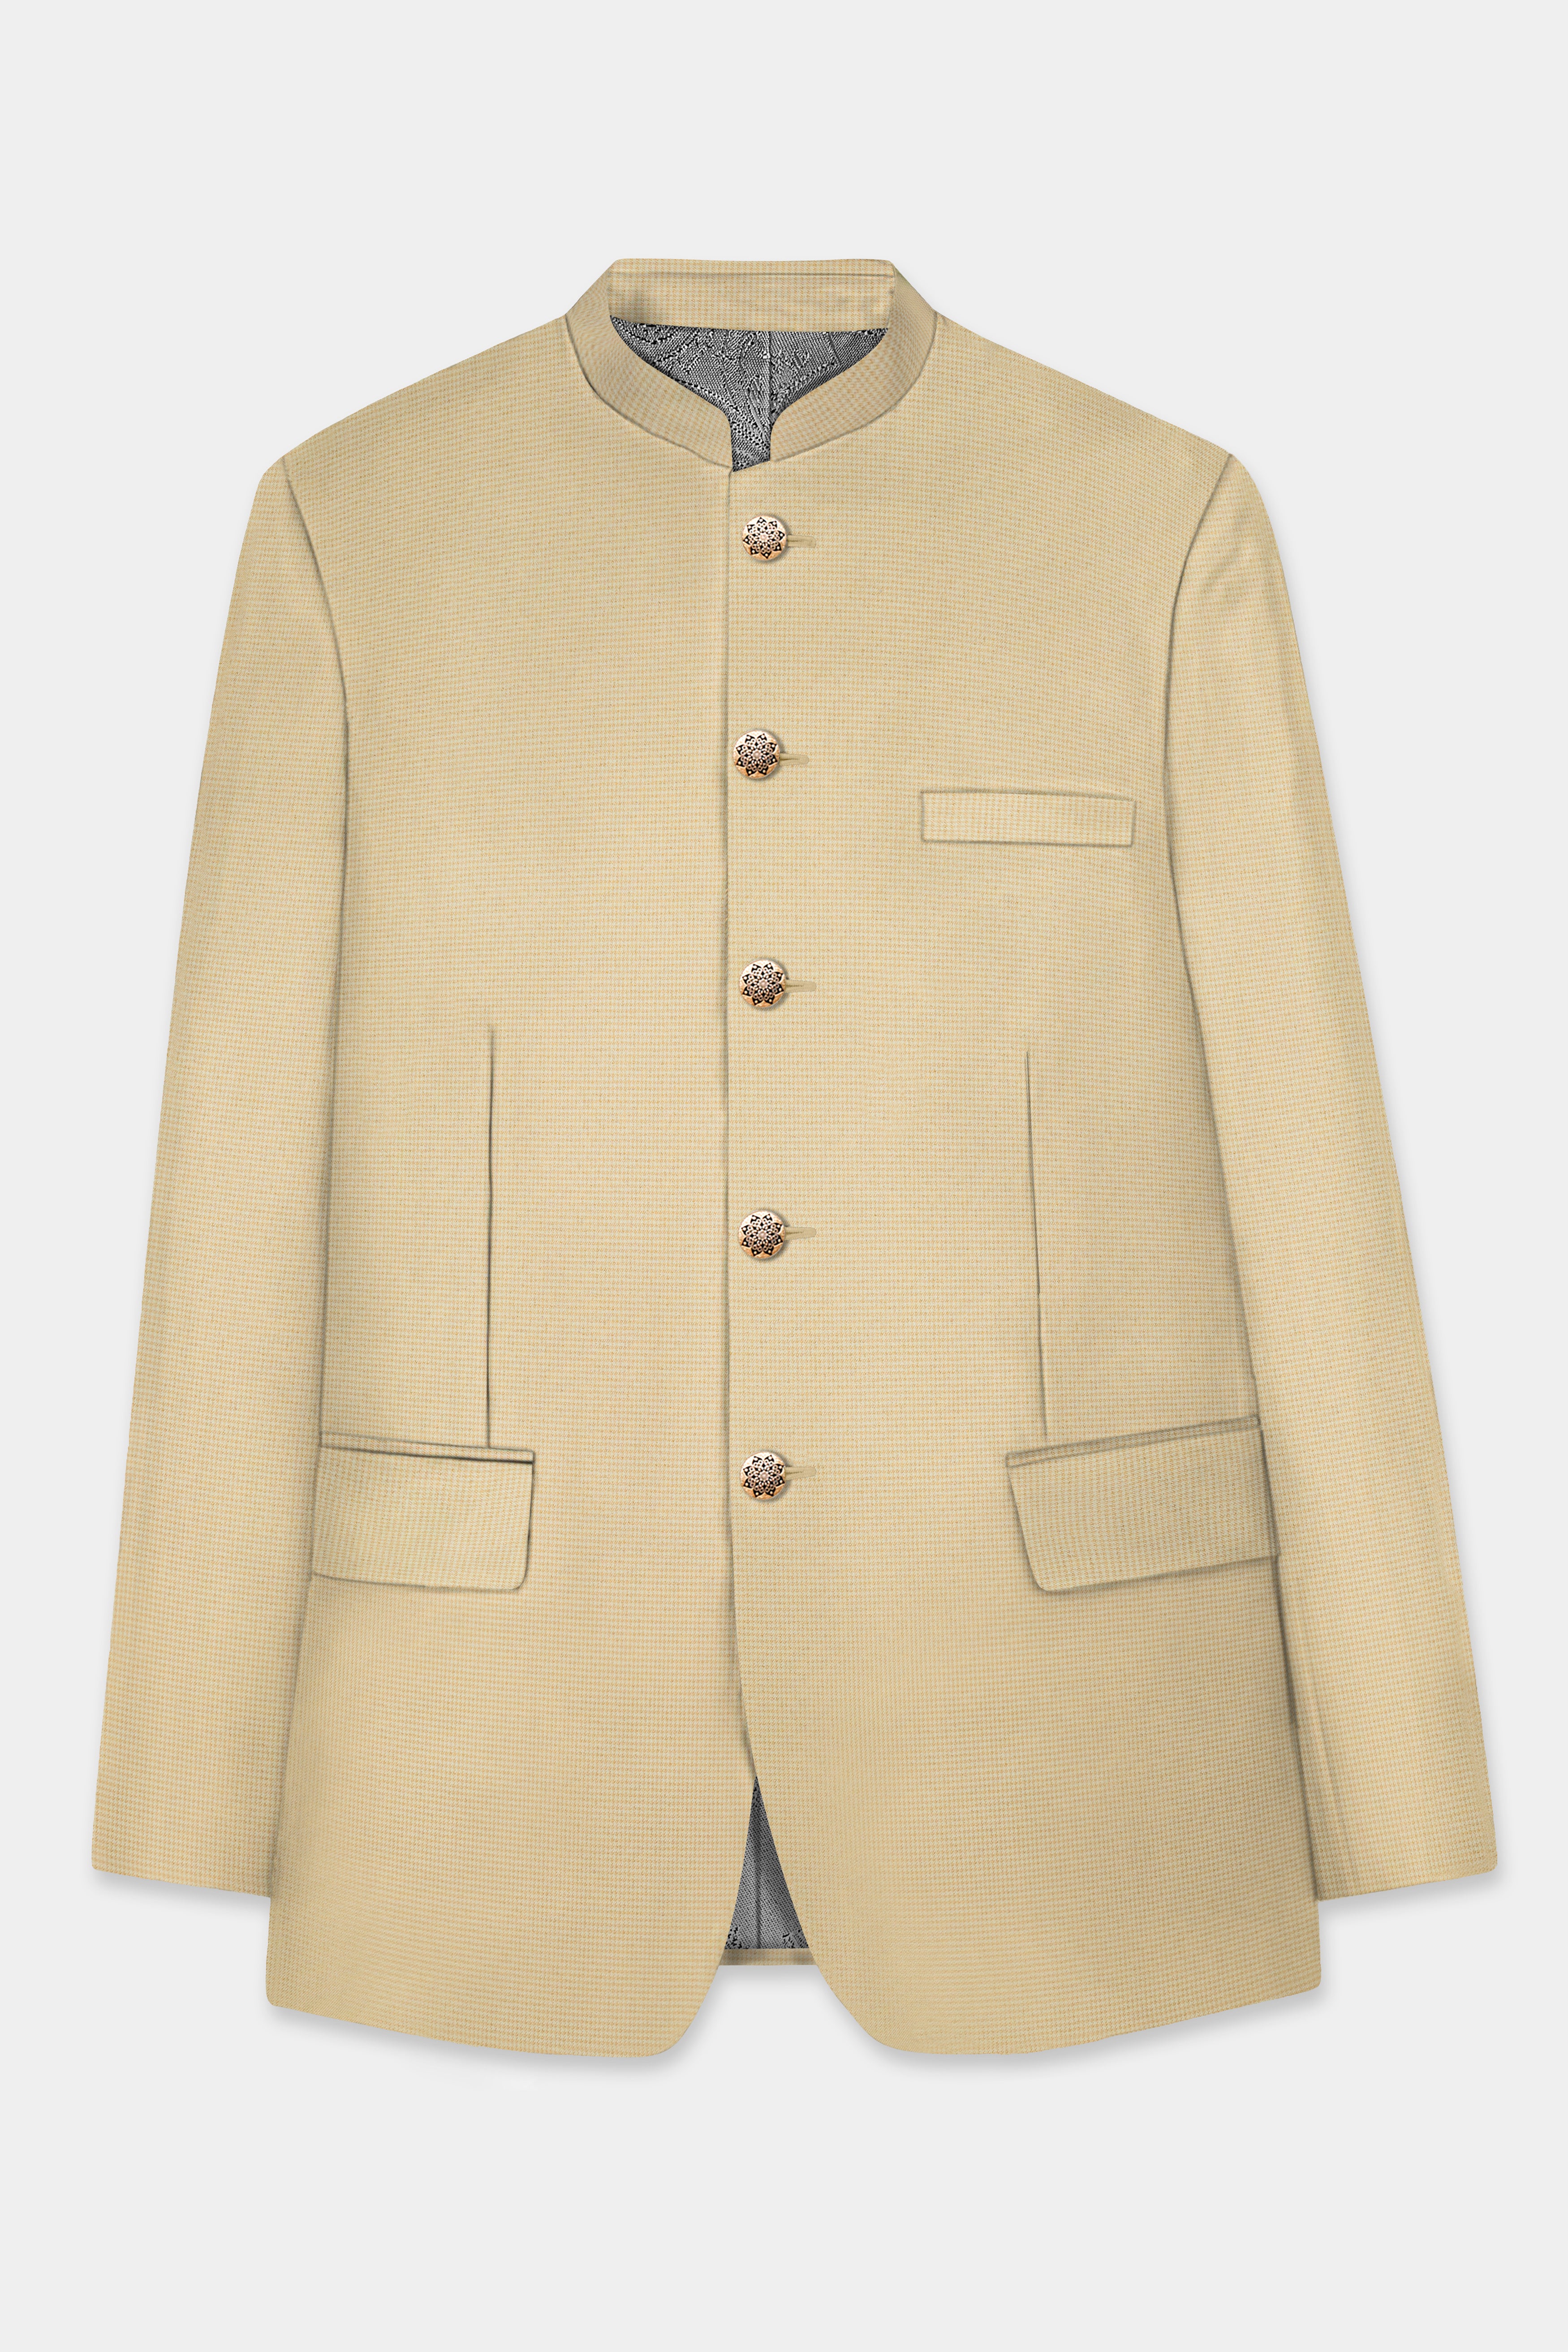 Hampton Cream Houndstooth Textured Wool Rich Bandhgala Suit